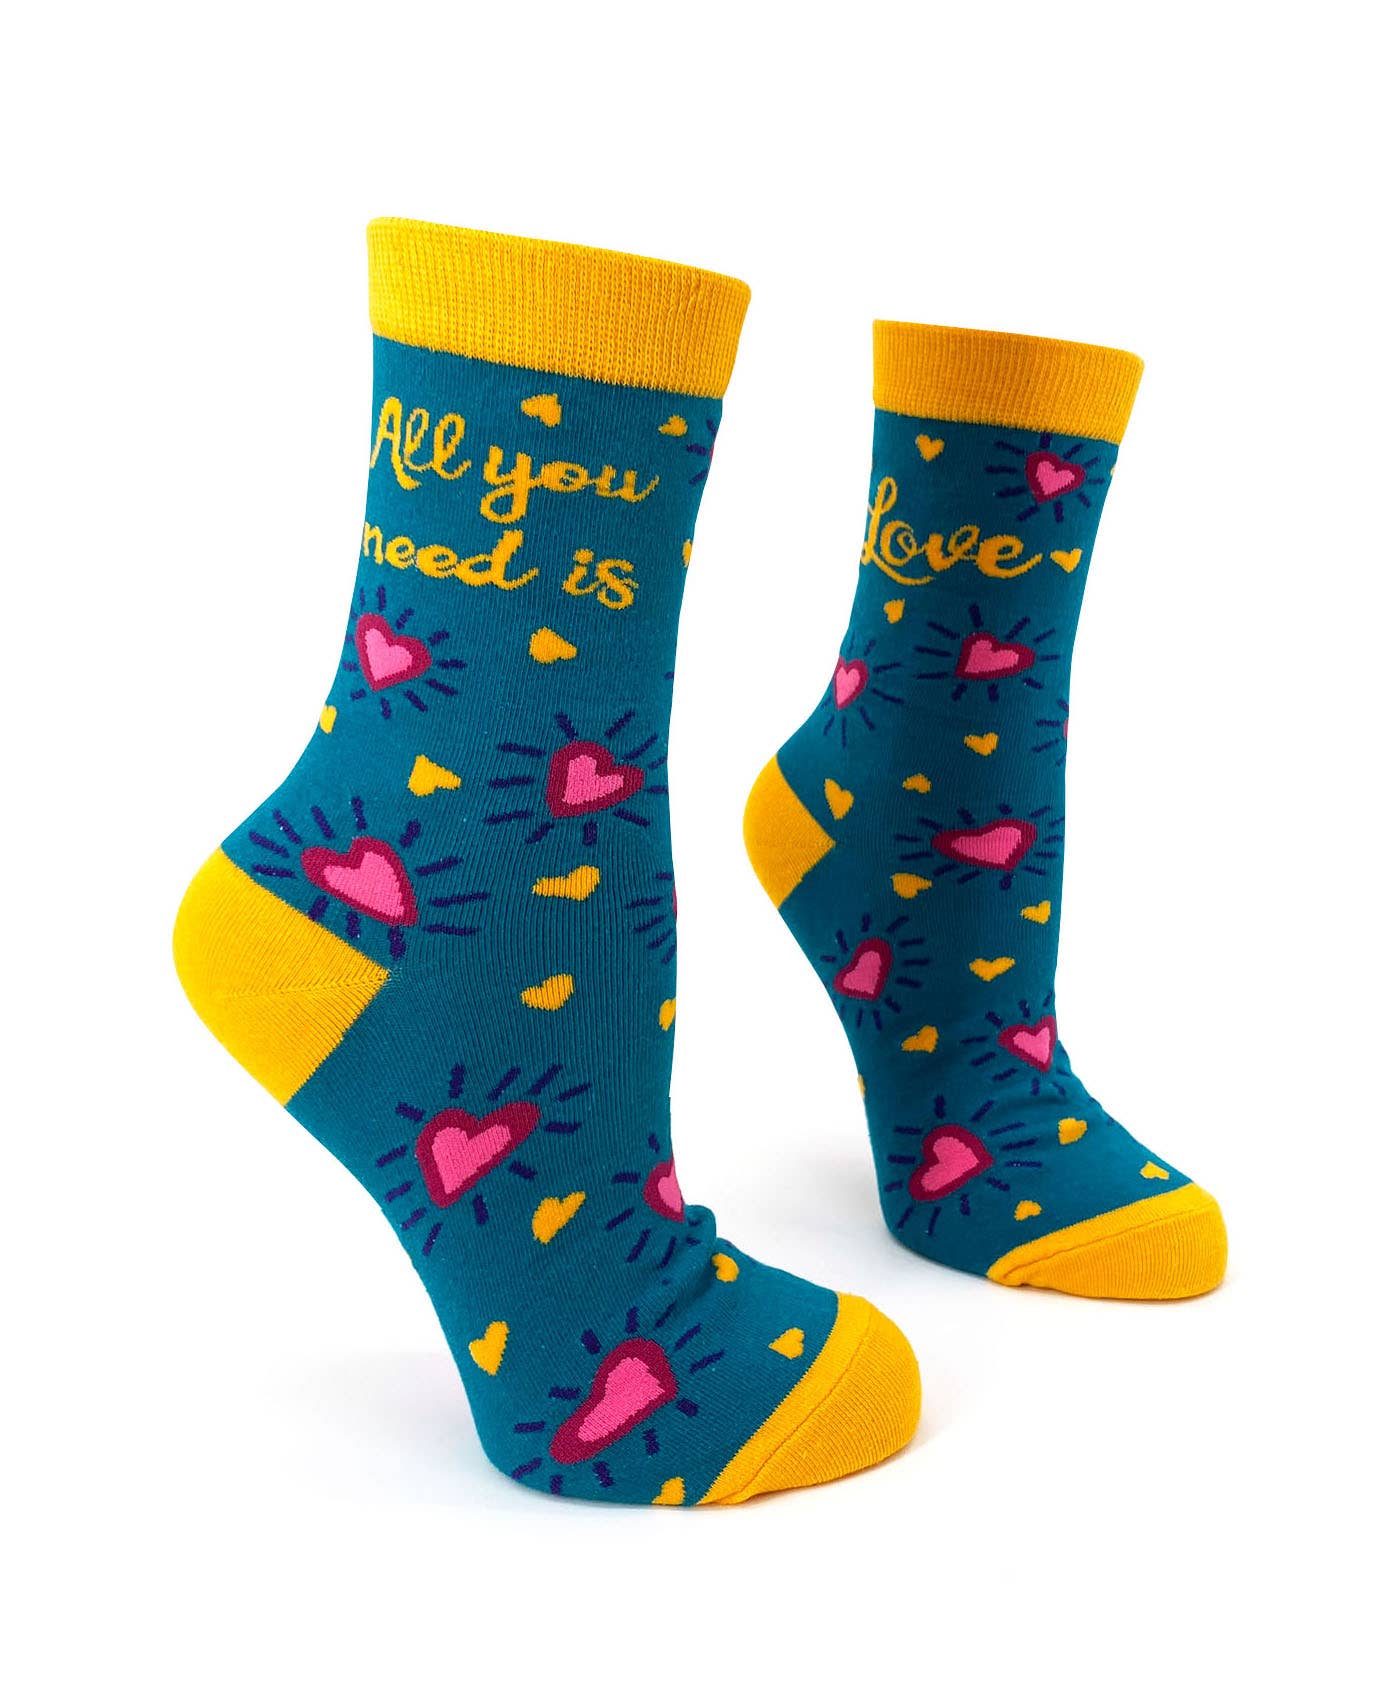 All You Need Is Love Women's Novelty Crew Socks